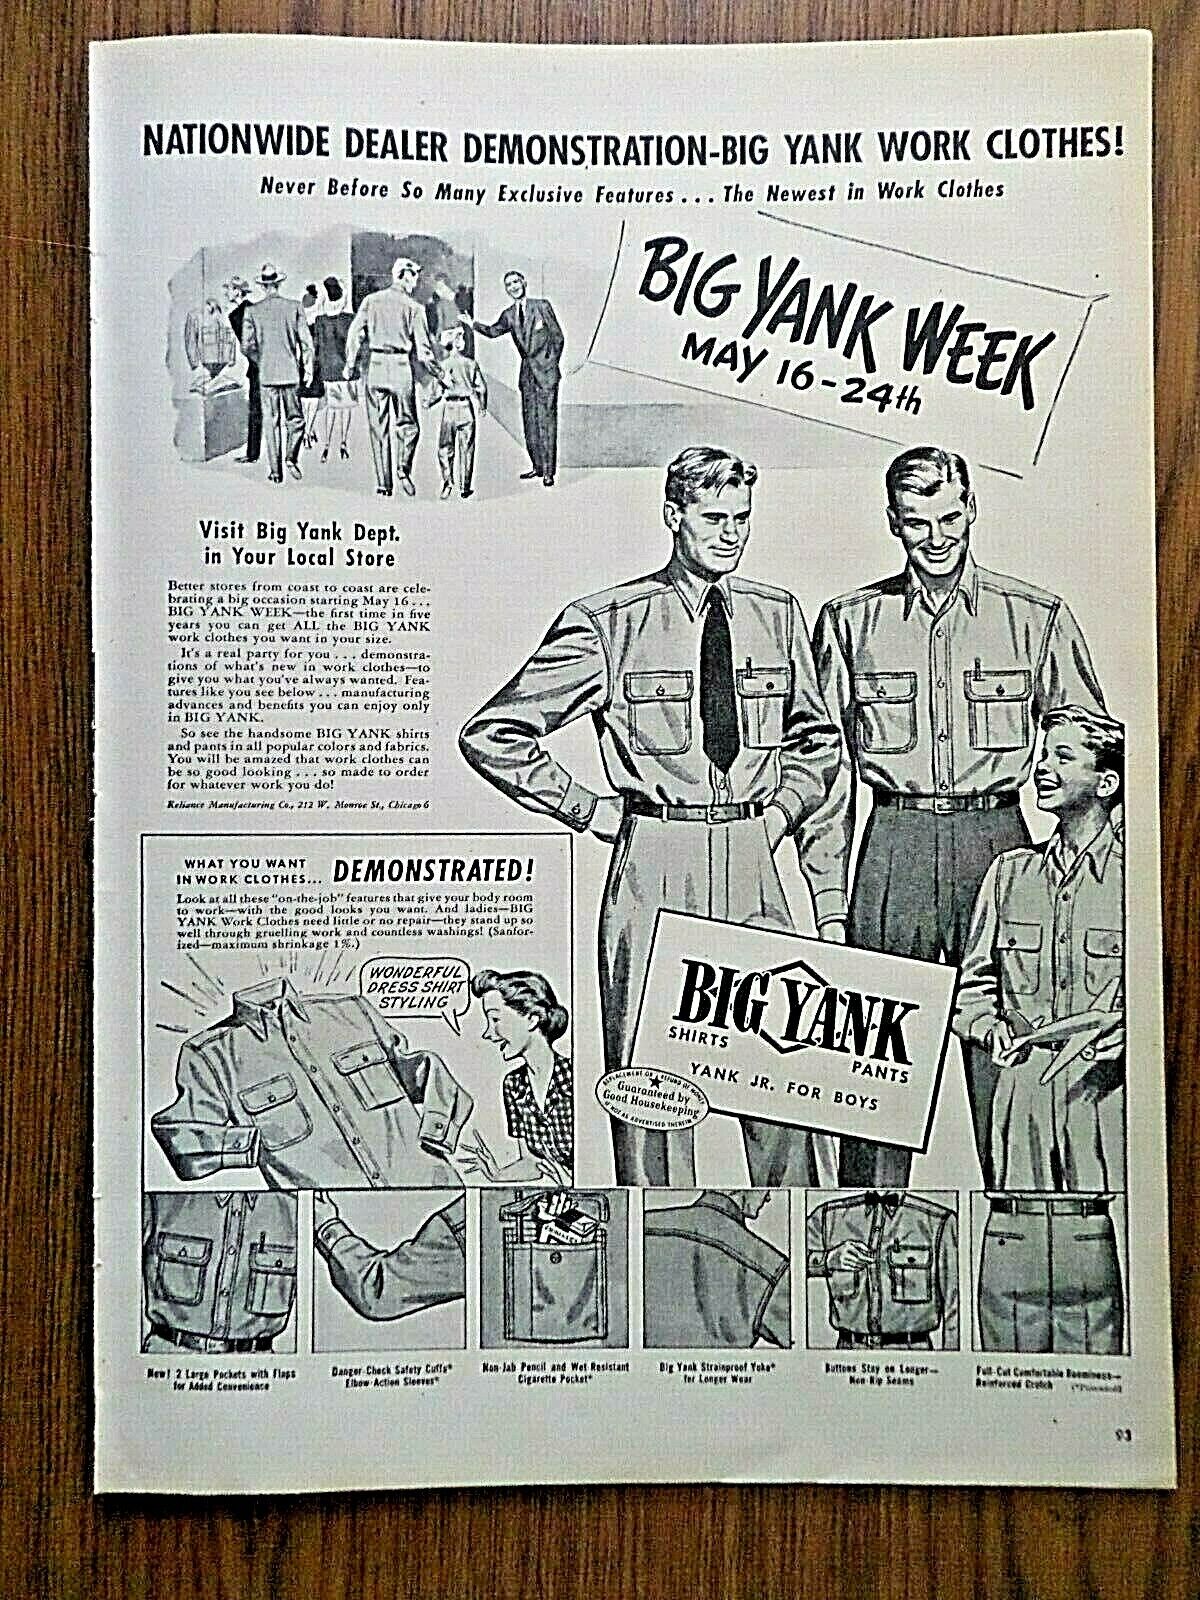 1947 Big Yank Week Work Clothes Ad Nationwide Dealer Demonstration 